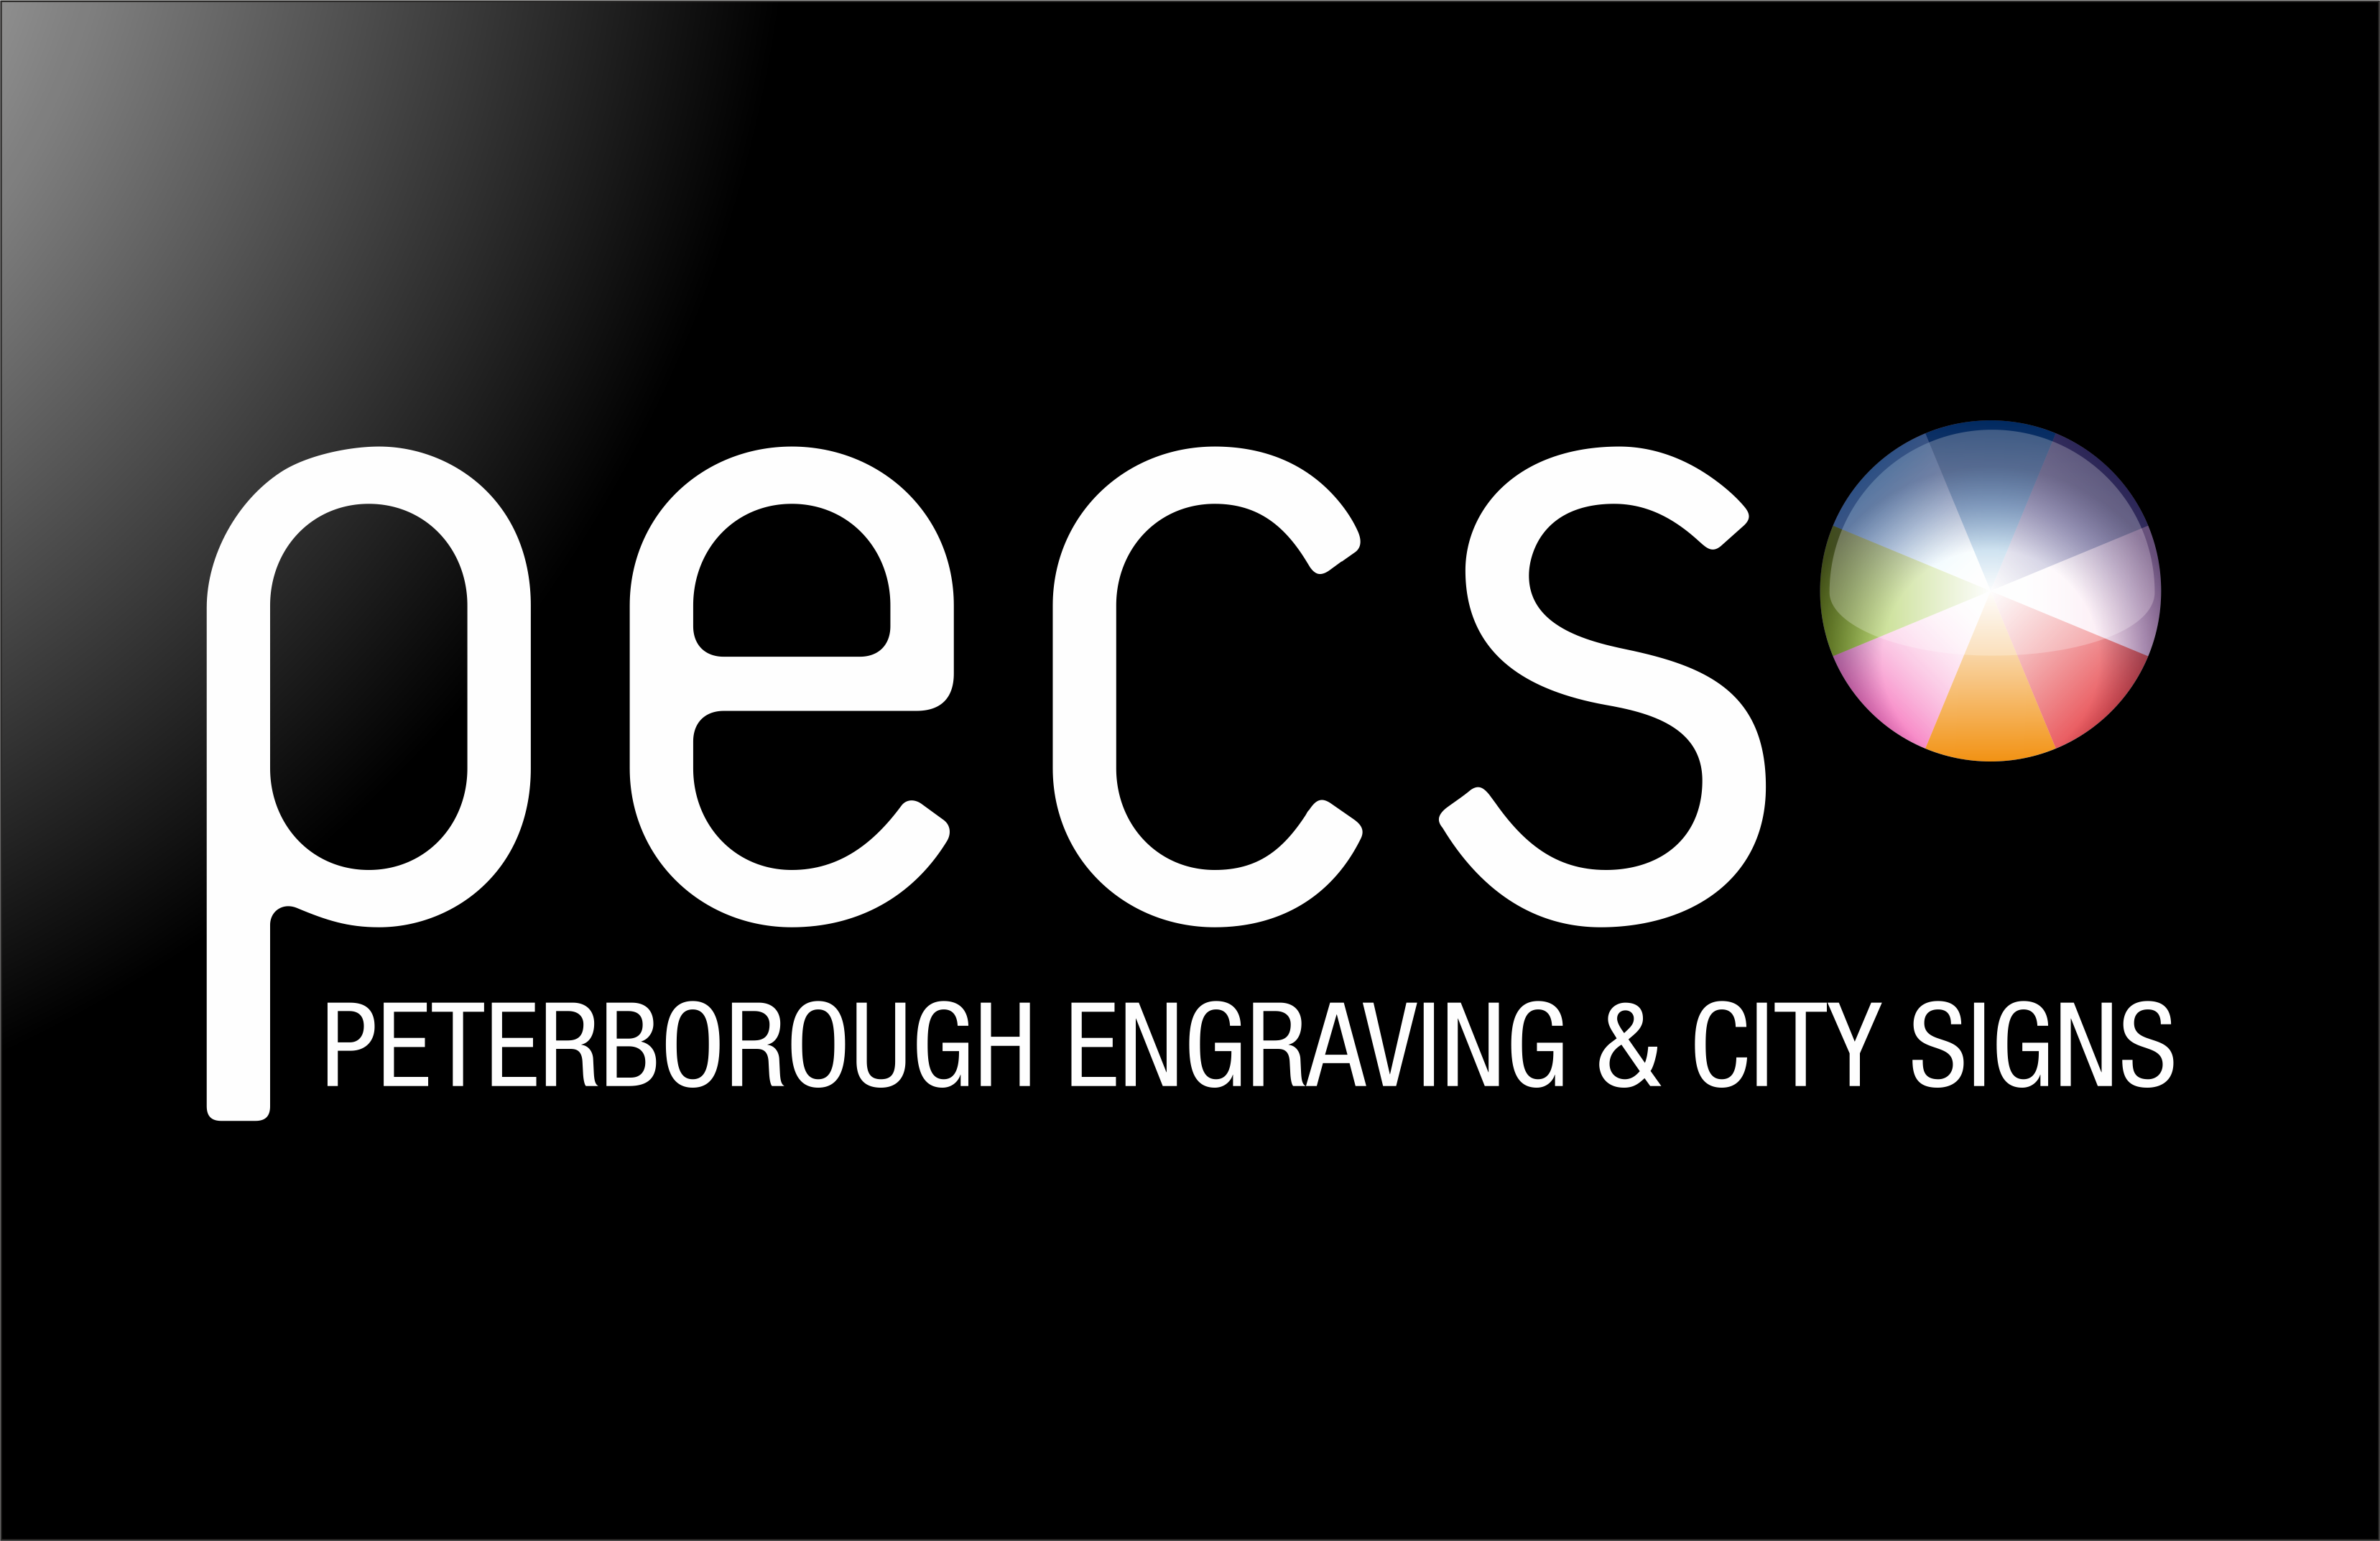 Peterborough Engraving & City Signs Ltd